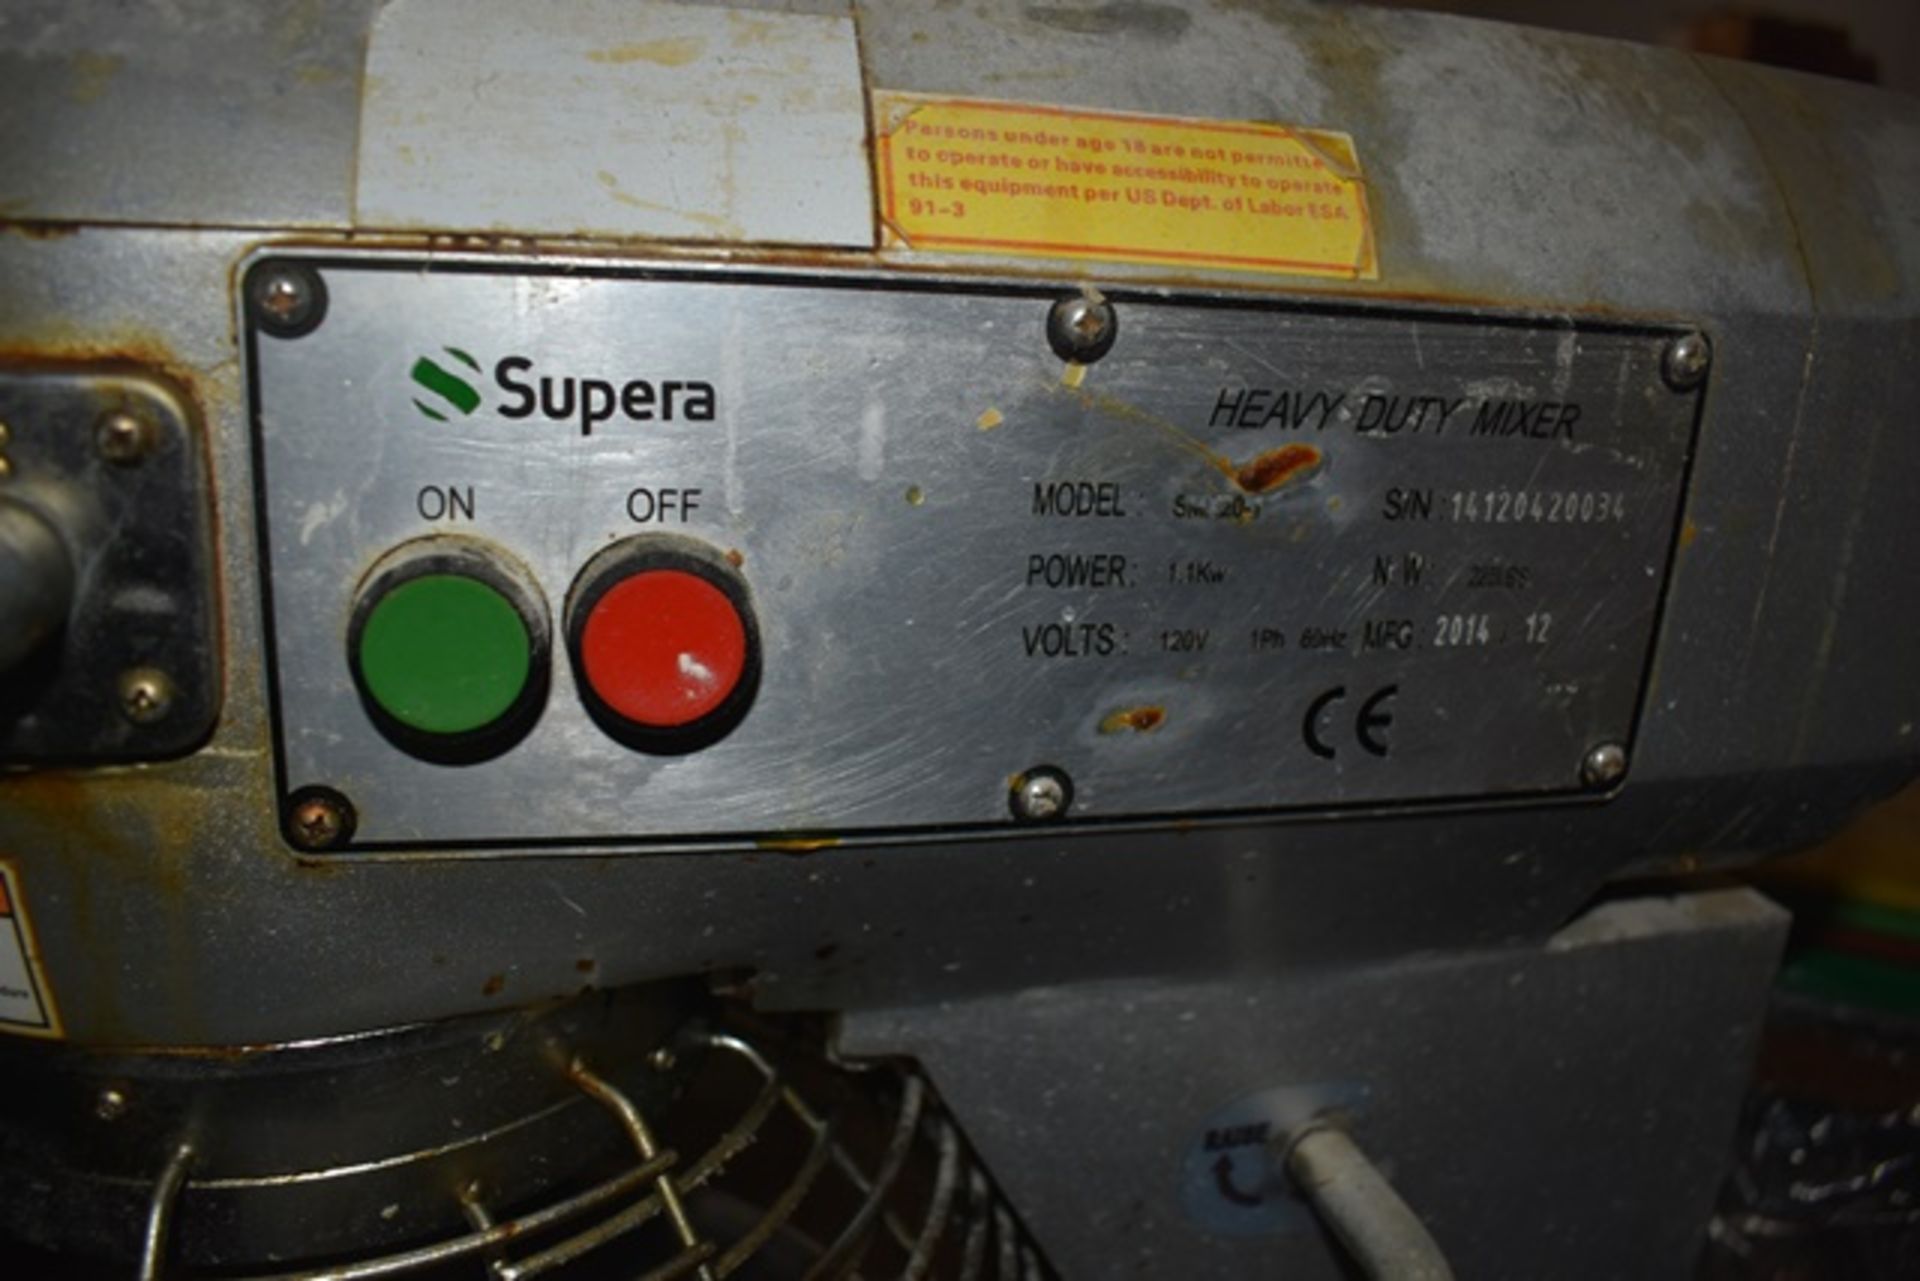 2014 Supera Model #SMX20-1 Heavy Duty Mixer w/Bowl, SN 14120420034, Mounted on 4-Wheel Base - Image 2 of 3